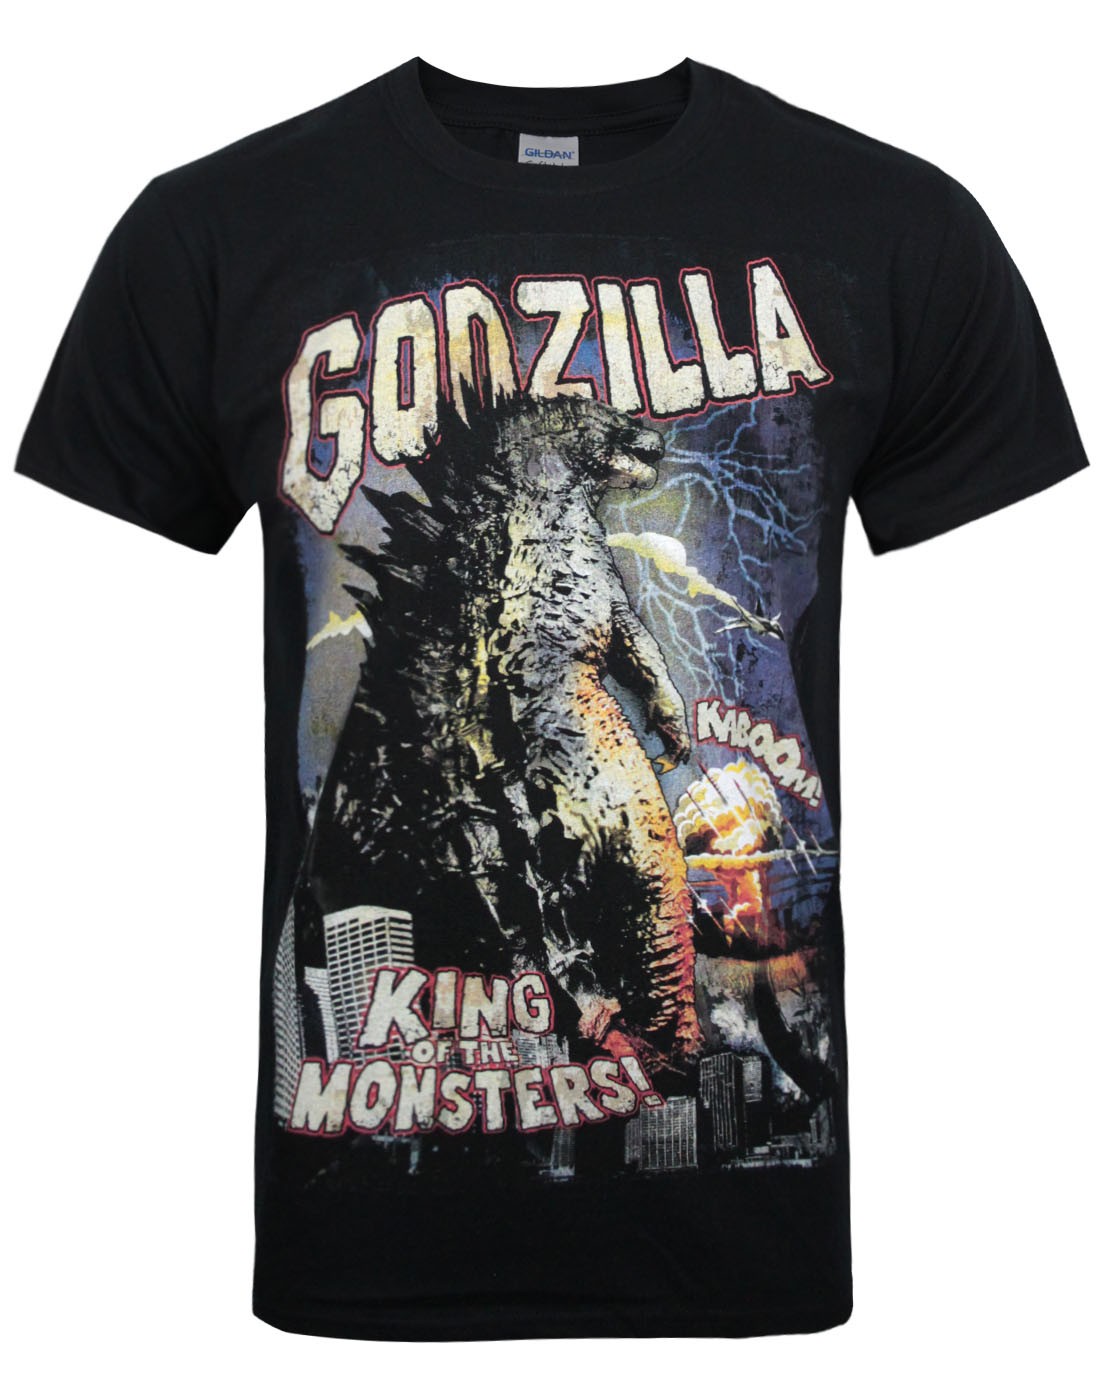 Godzilla Retro Poster Men's T-Shirt S, M, L, XL